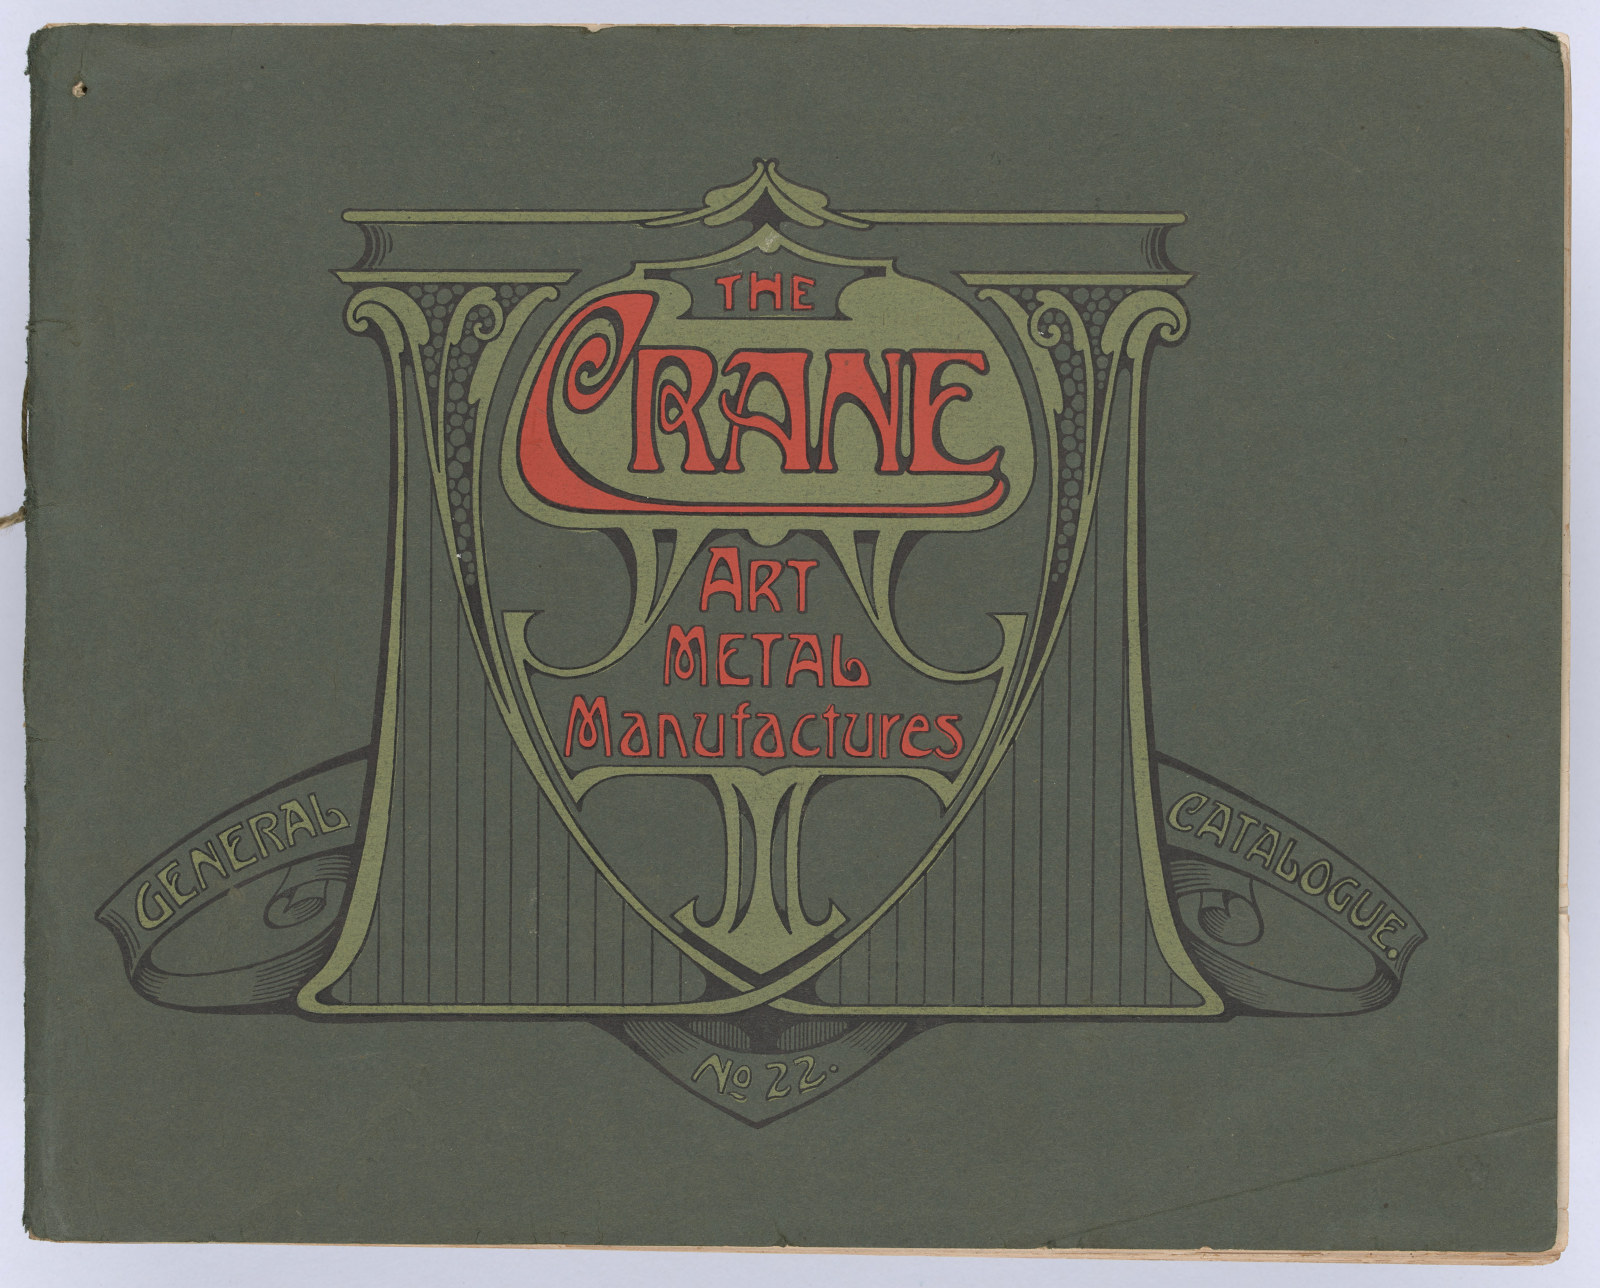 The Crane art metal manufactures General catalogue,. No. 22.